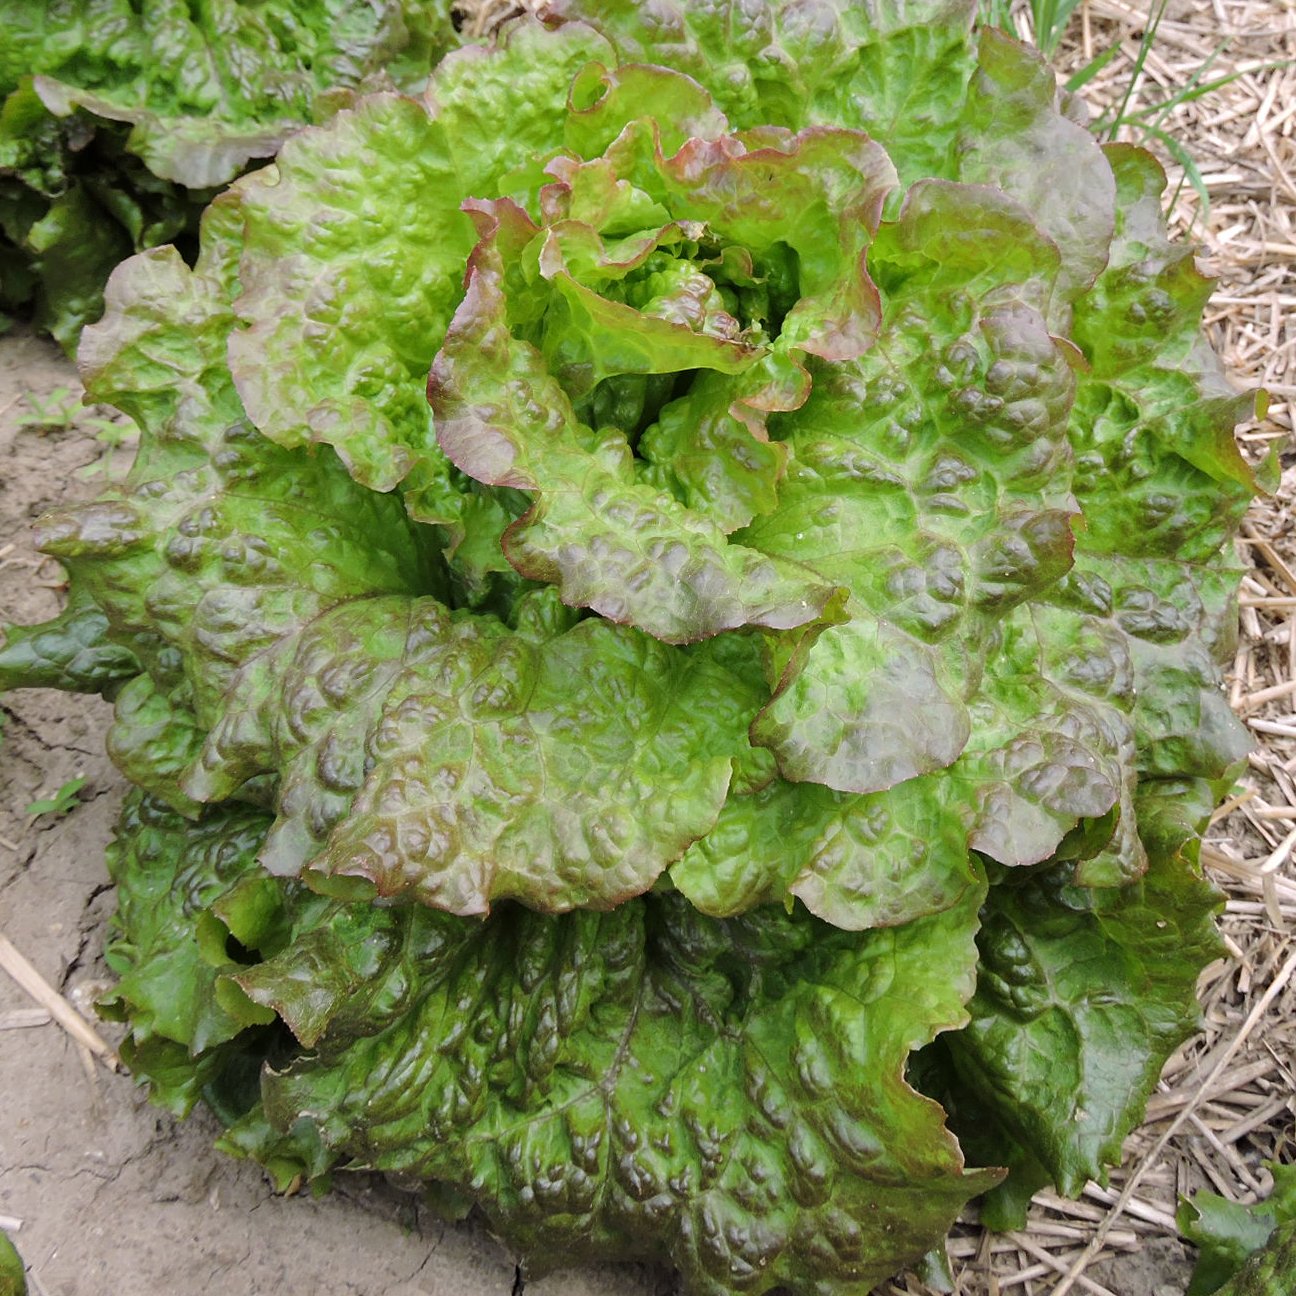 'All Cream' lettuce